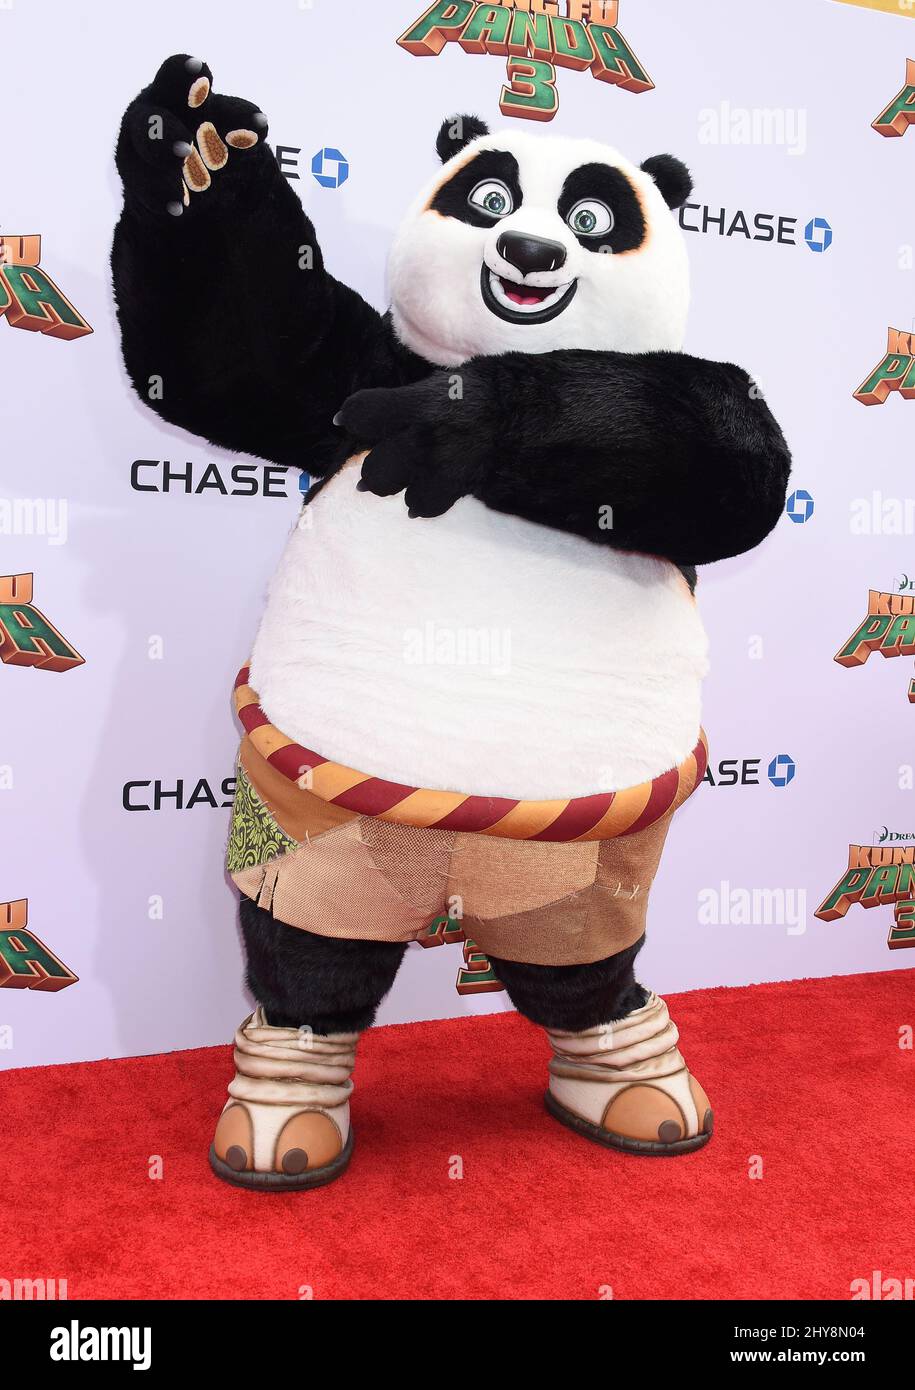 15 janvier 2016 Hollywood, ca. Po 'Kung Fu Panda 3' première mondiale au TCL Chinese Theatre po 'Kung Fu Panda 3' première mondiale au TCL Chinese Theatre Banque D'Images